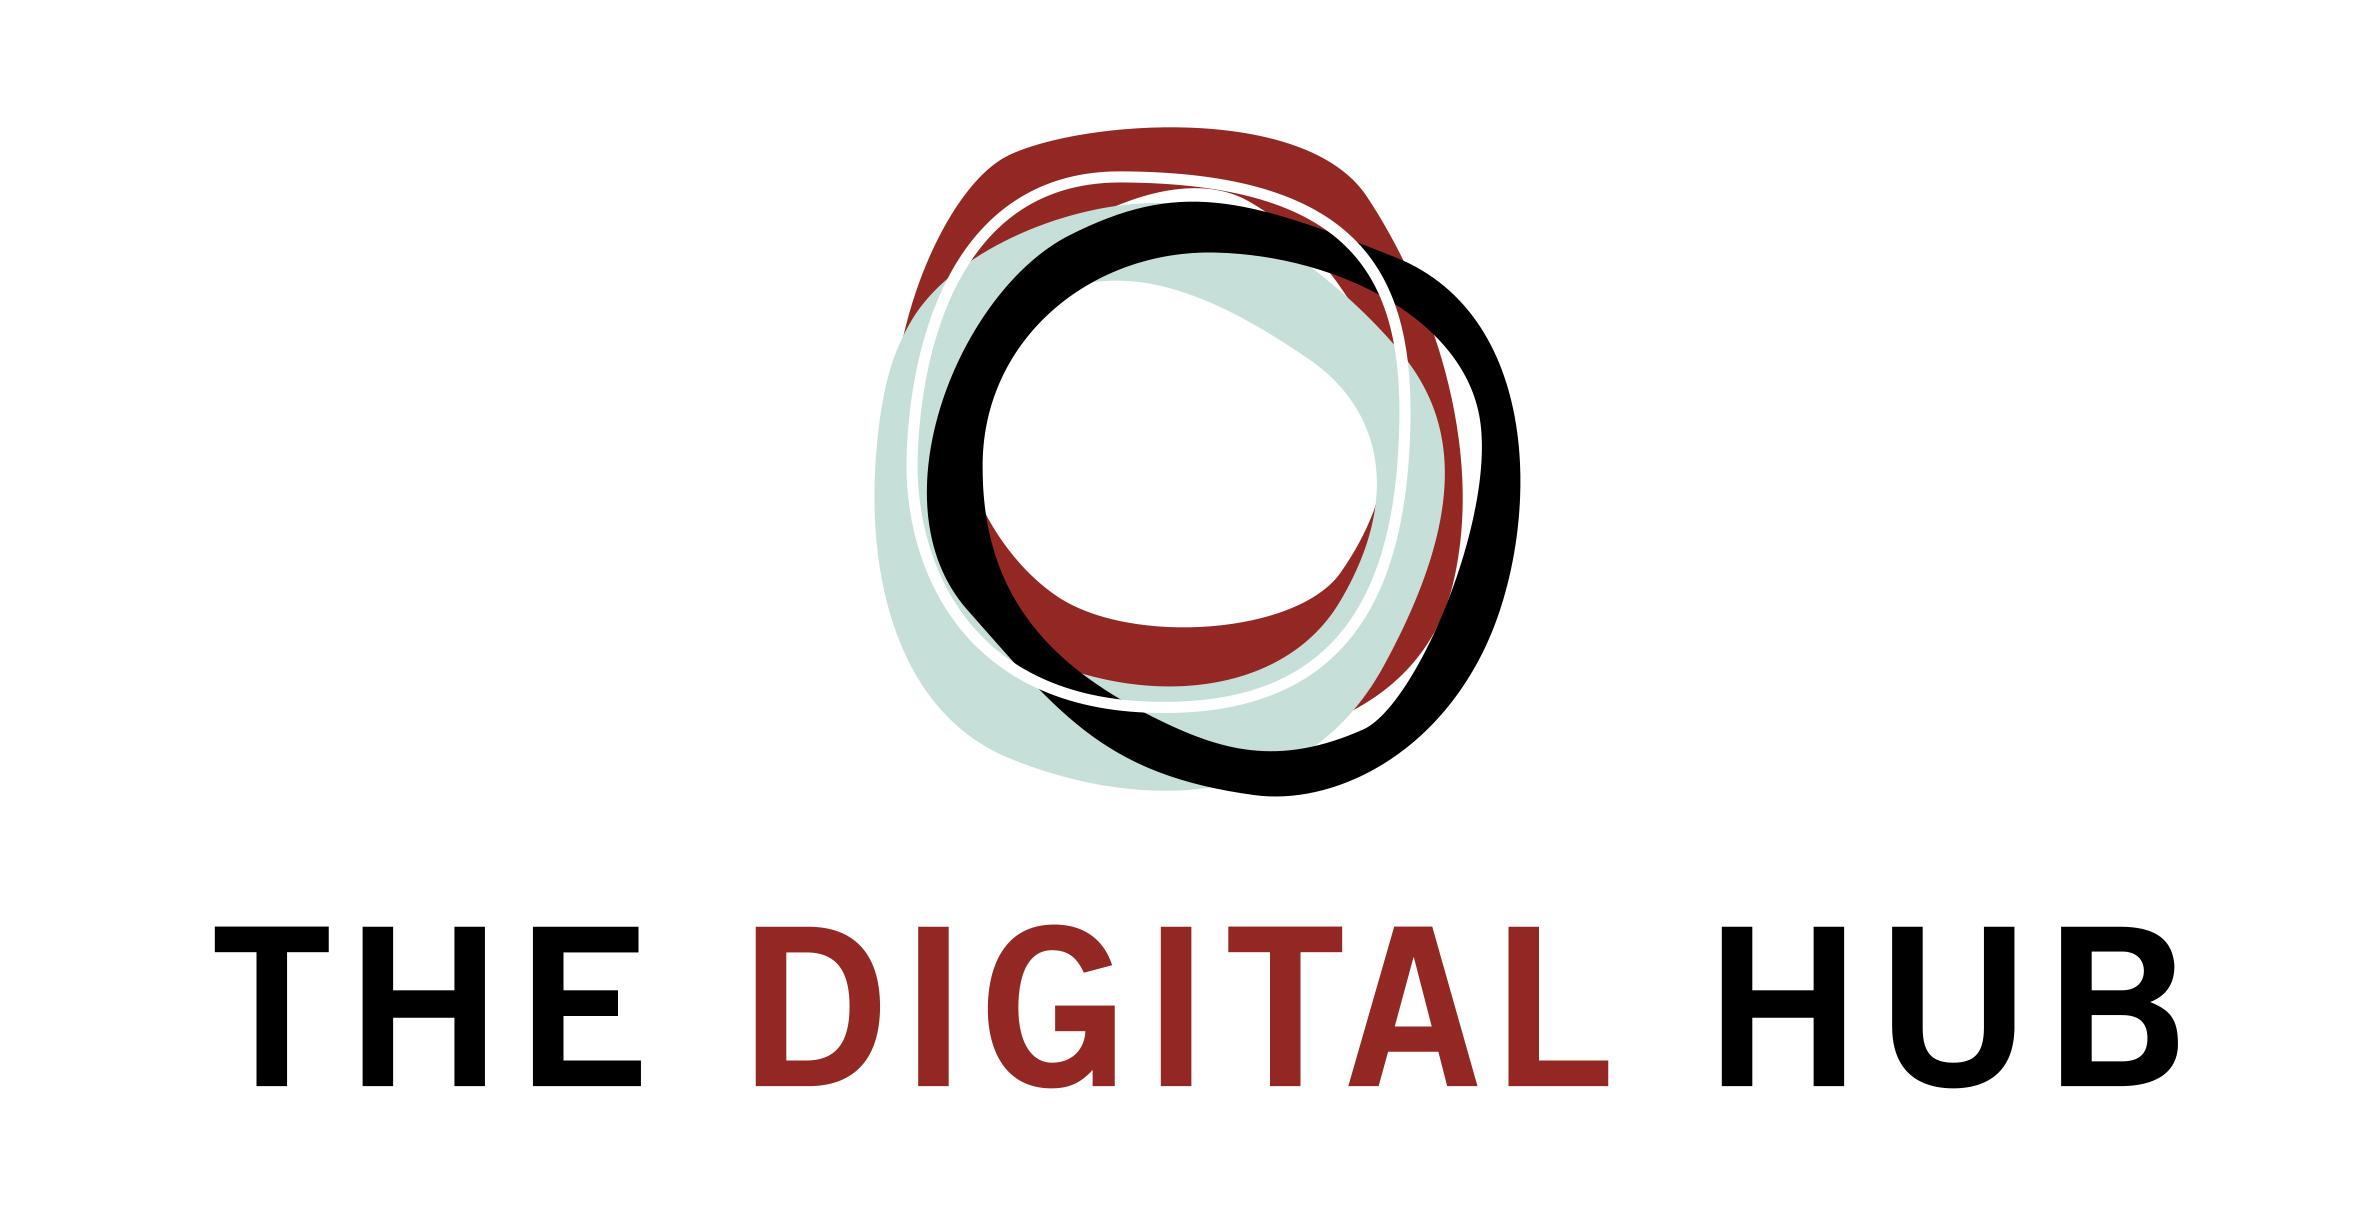 The Digital Hub